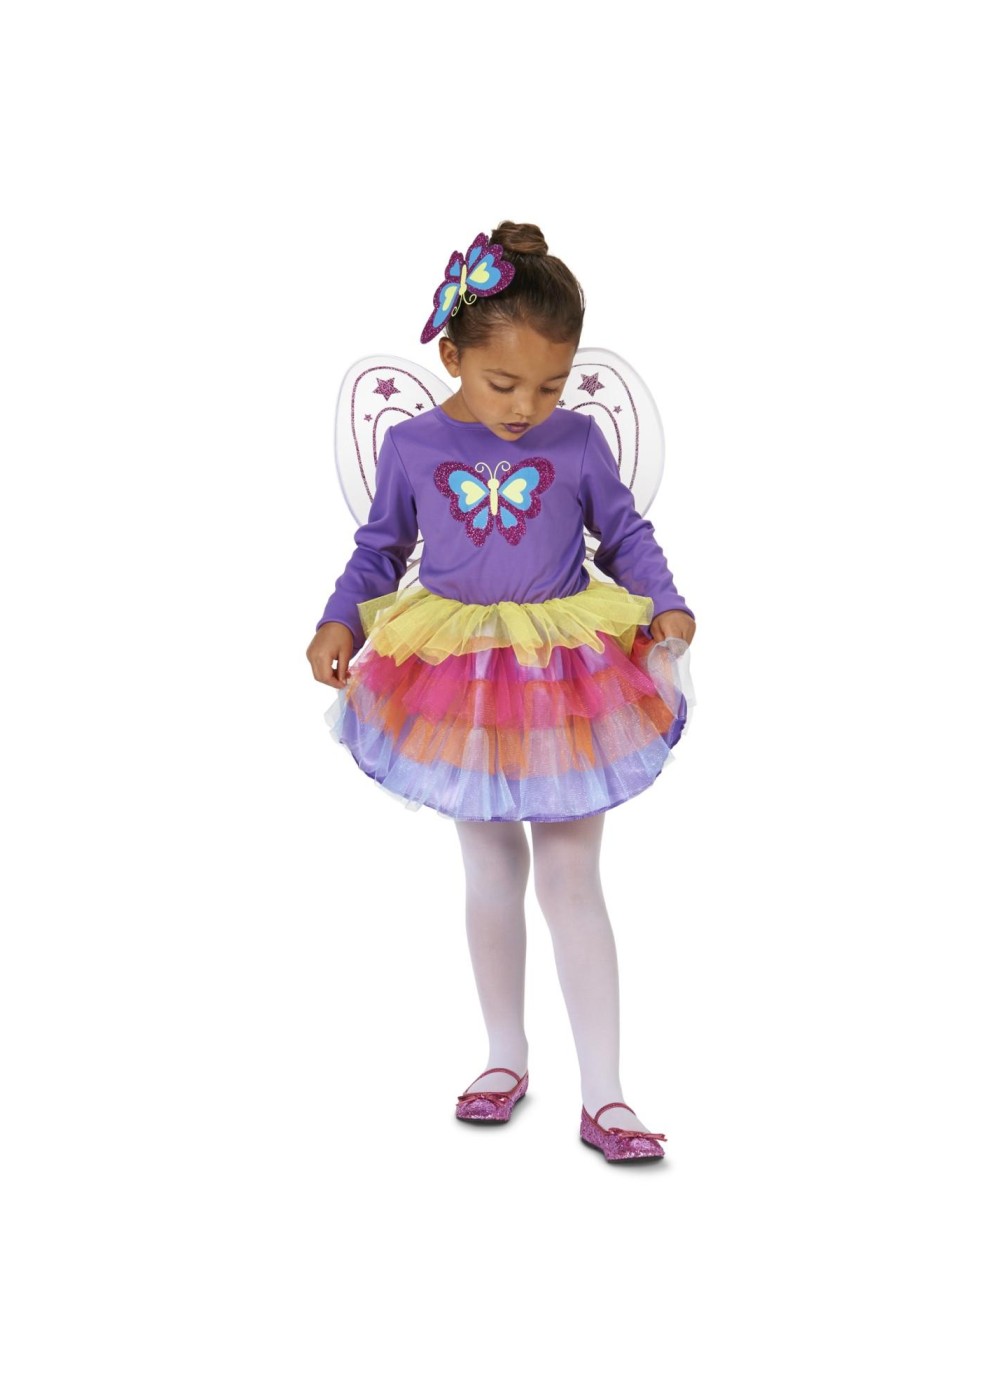 Fluttery Butterfly Toddler Girls Costume